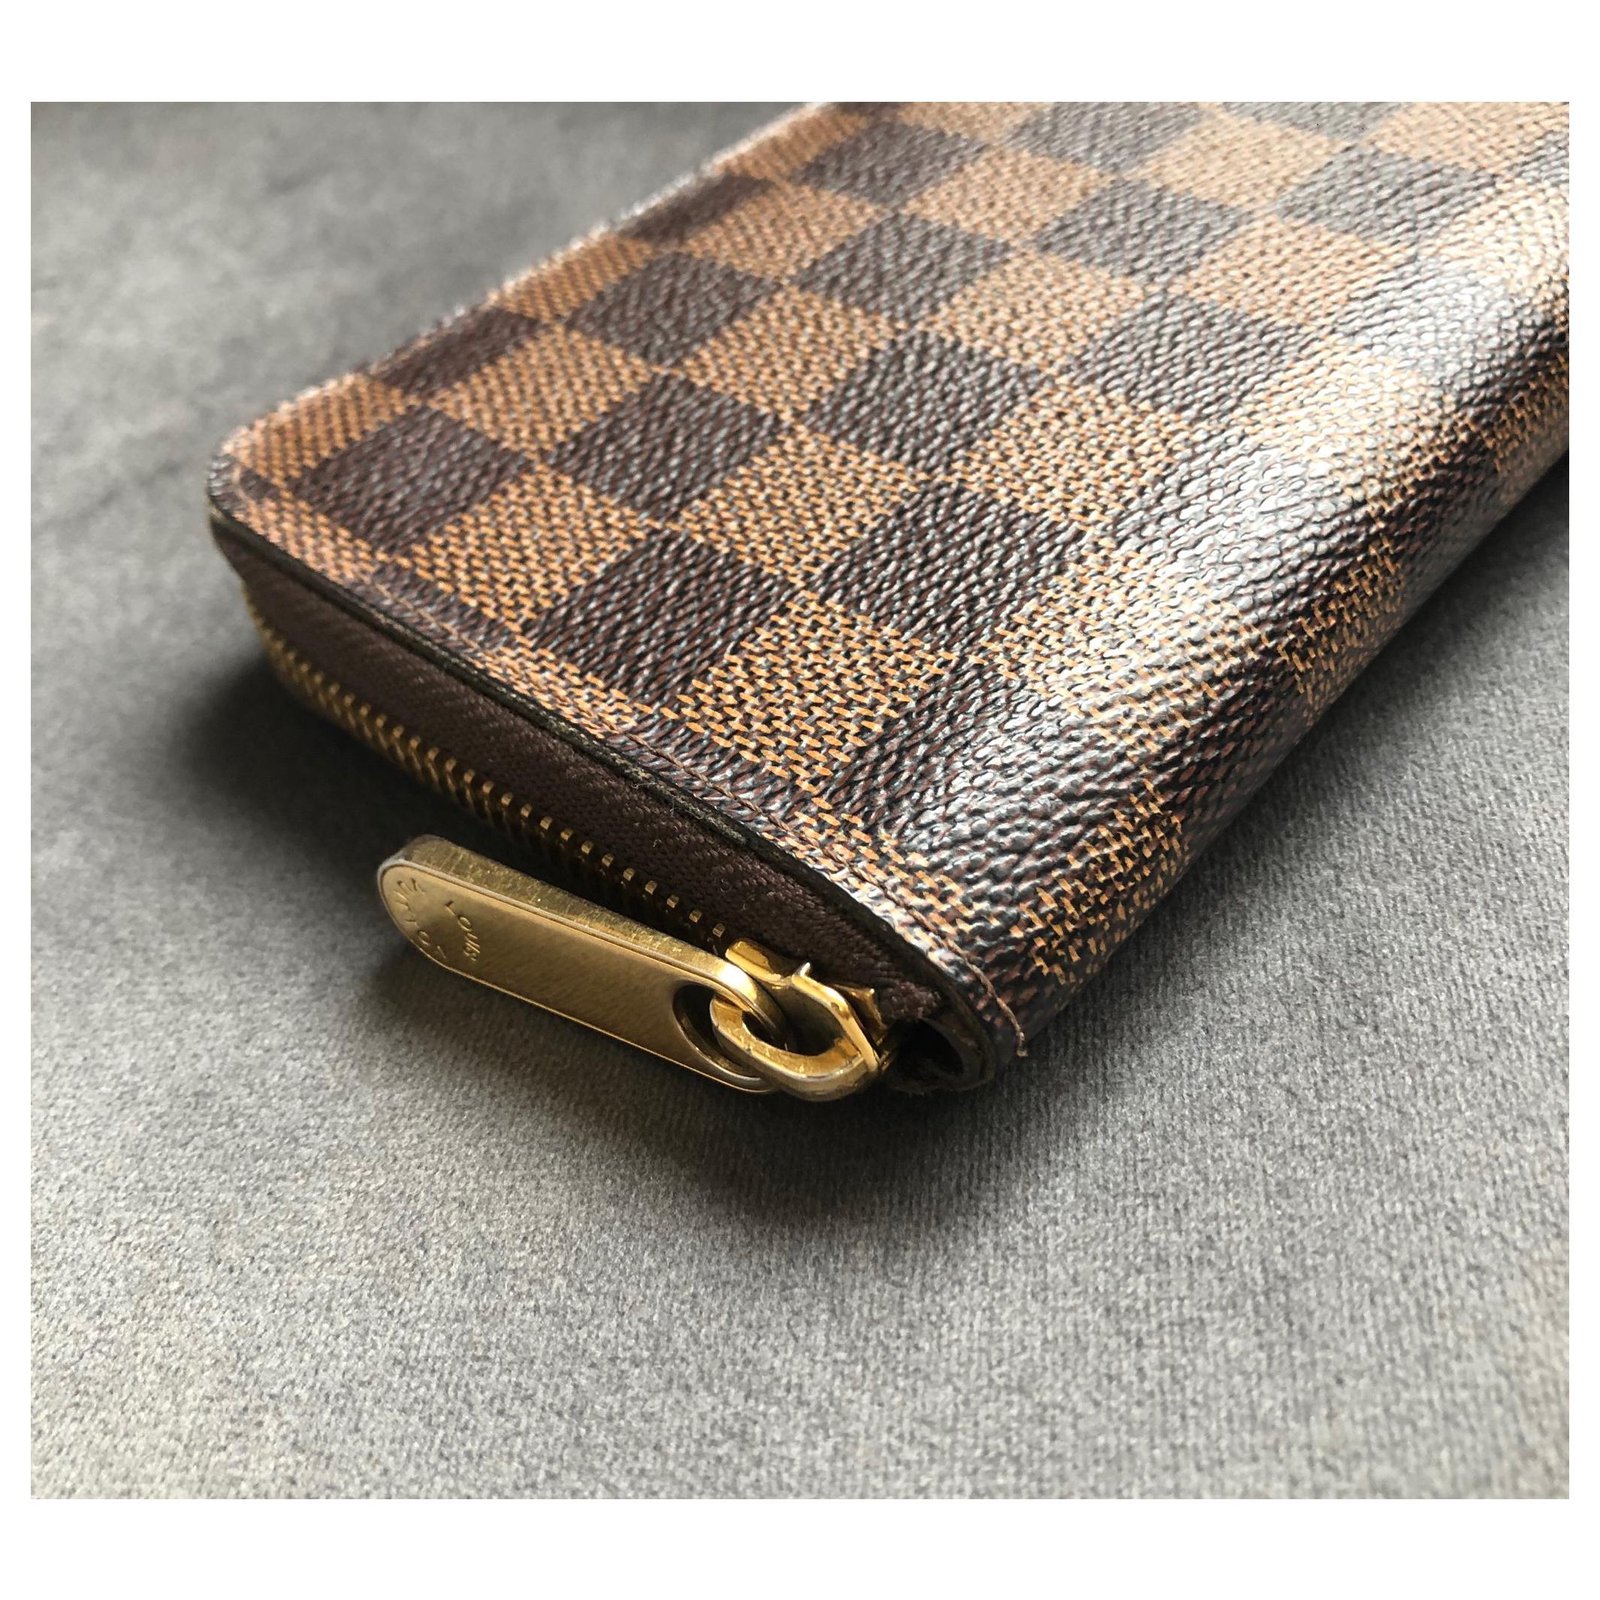 Louis Vuitton Damier Ebene Zippy Compact Wallet 